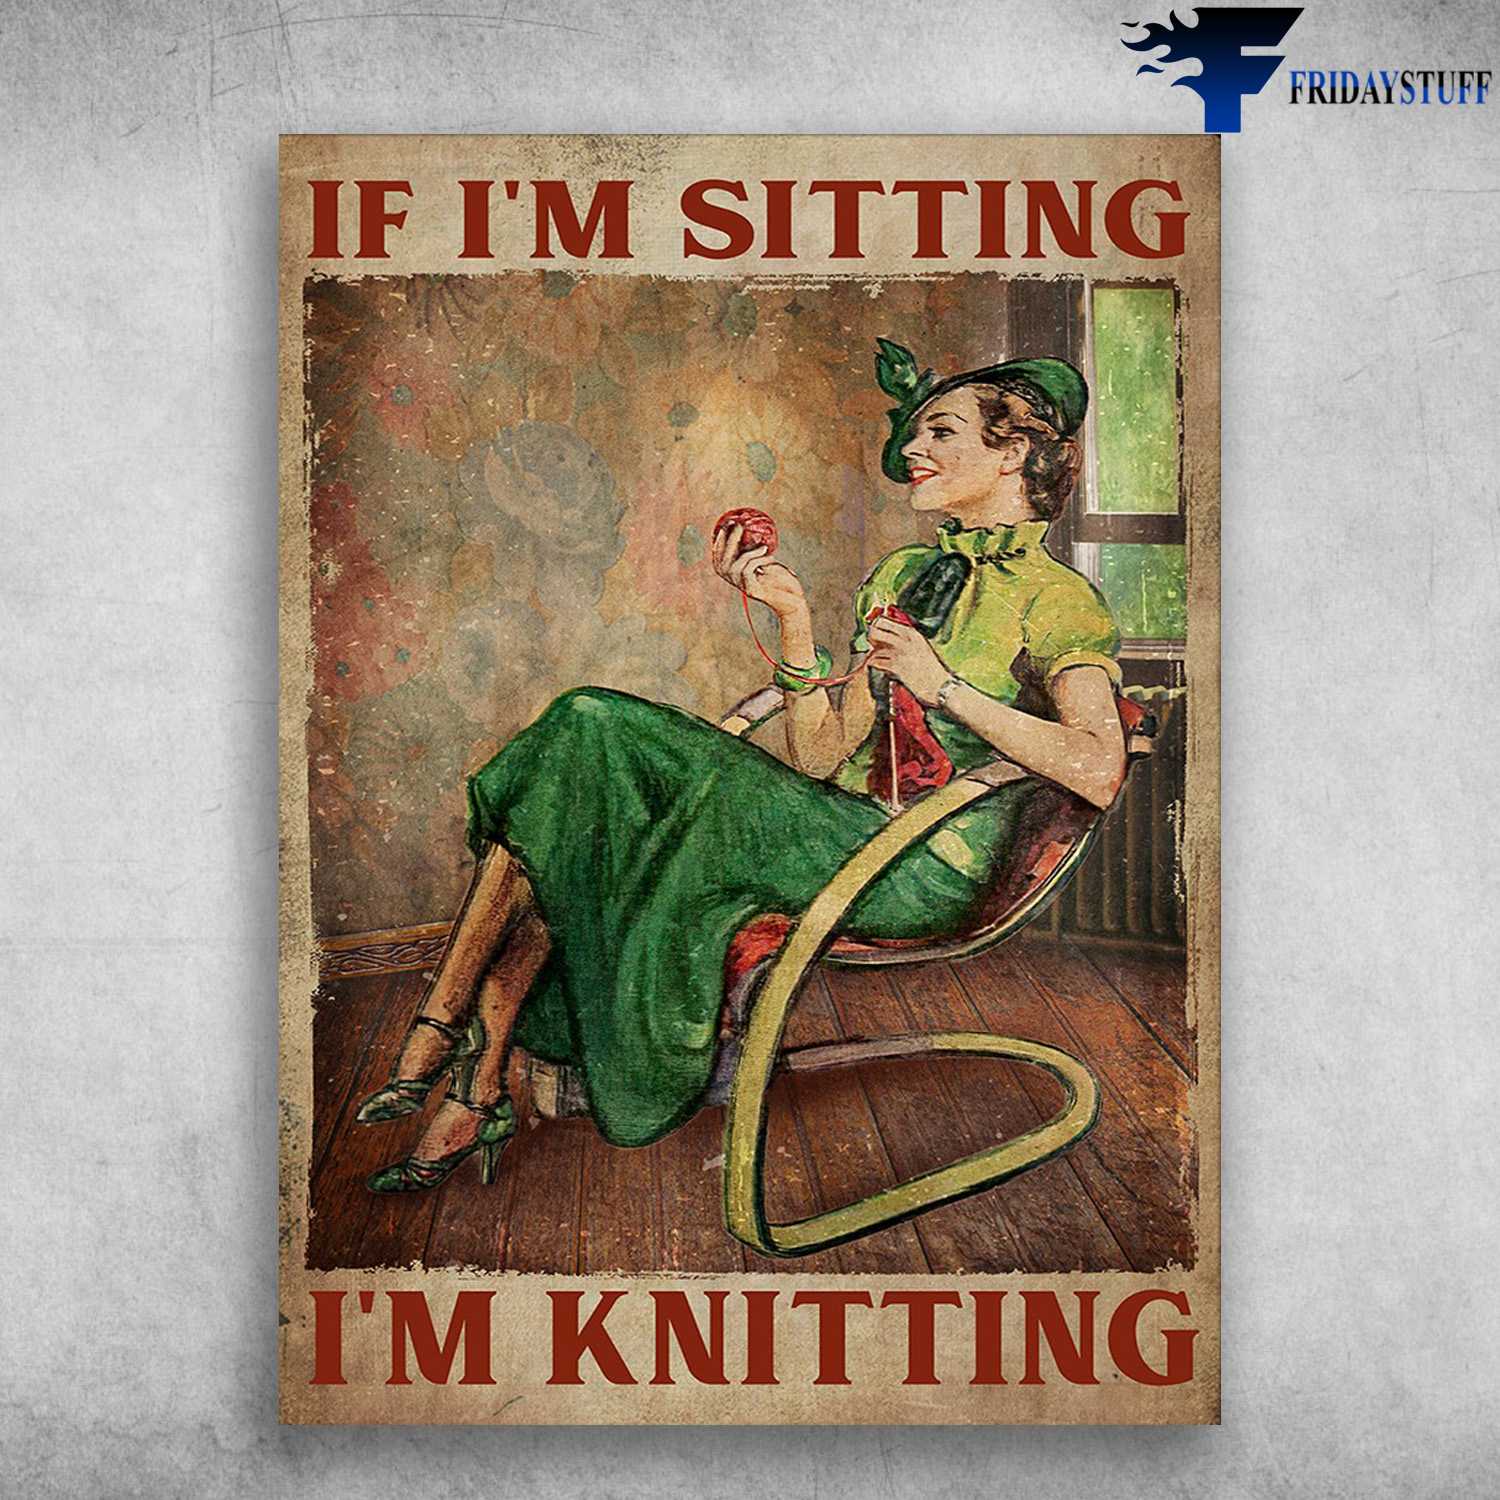 Knitting Girl - If I'm Sitting, I'm Knitting